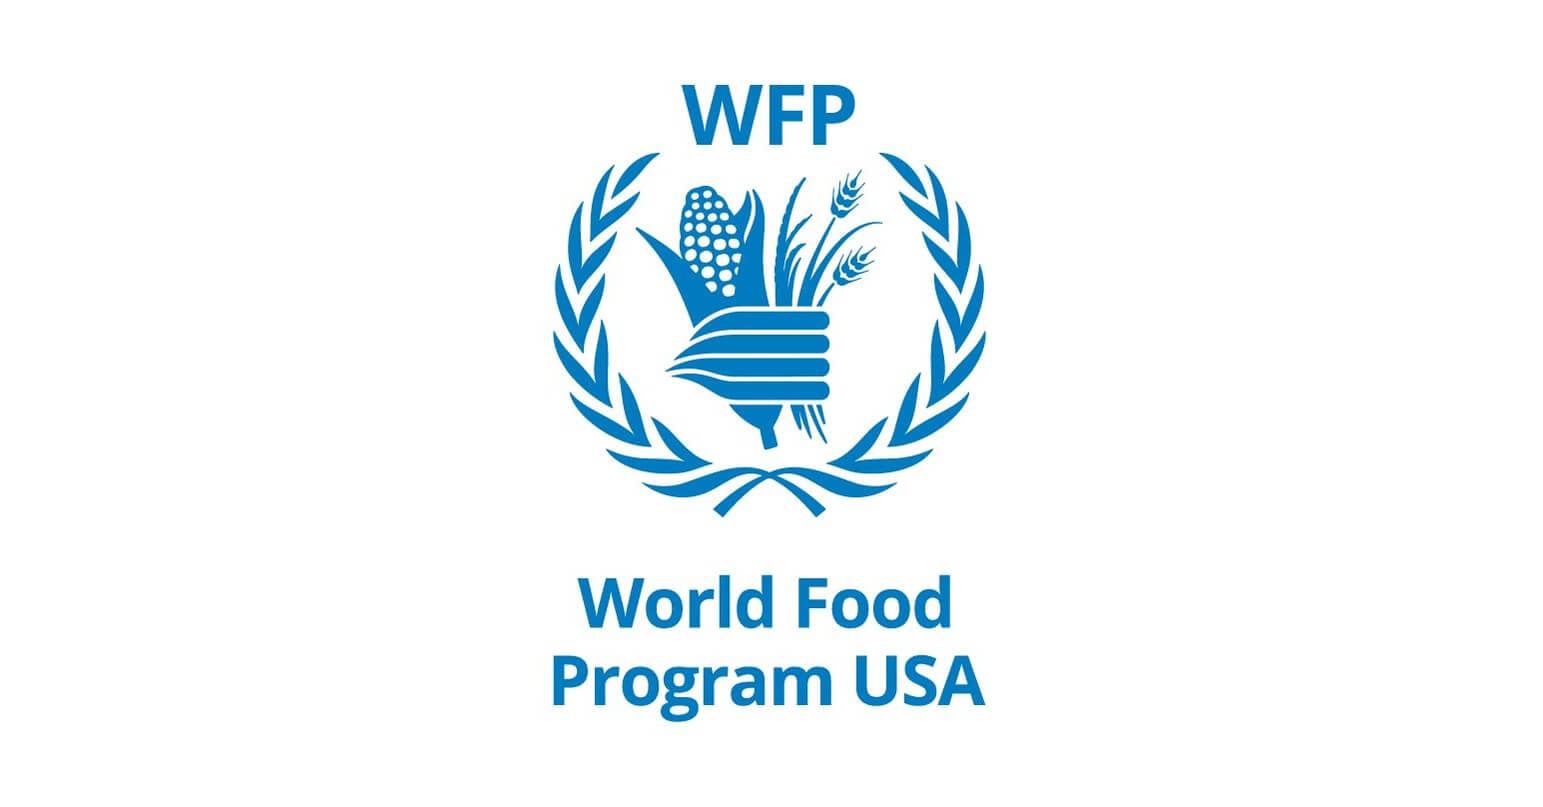 World Food Program mission statement